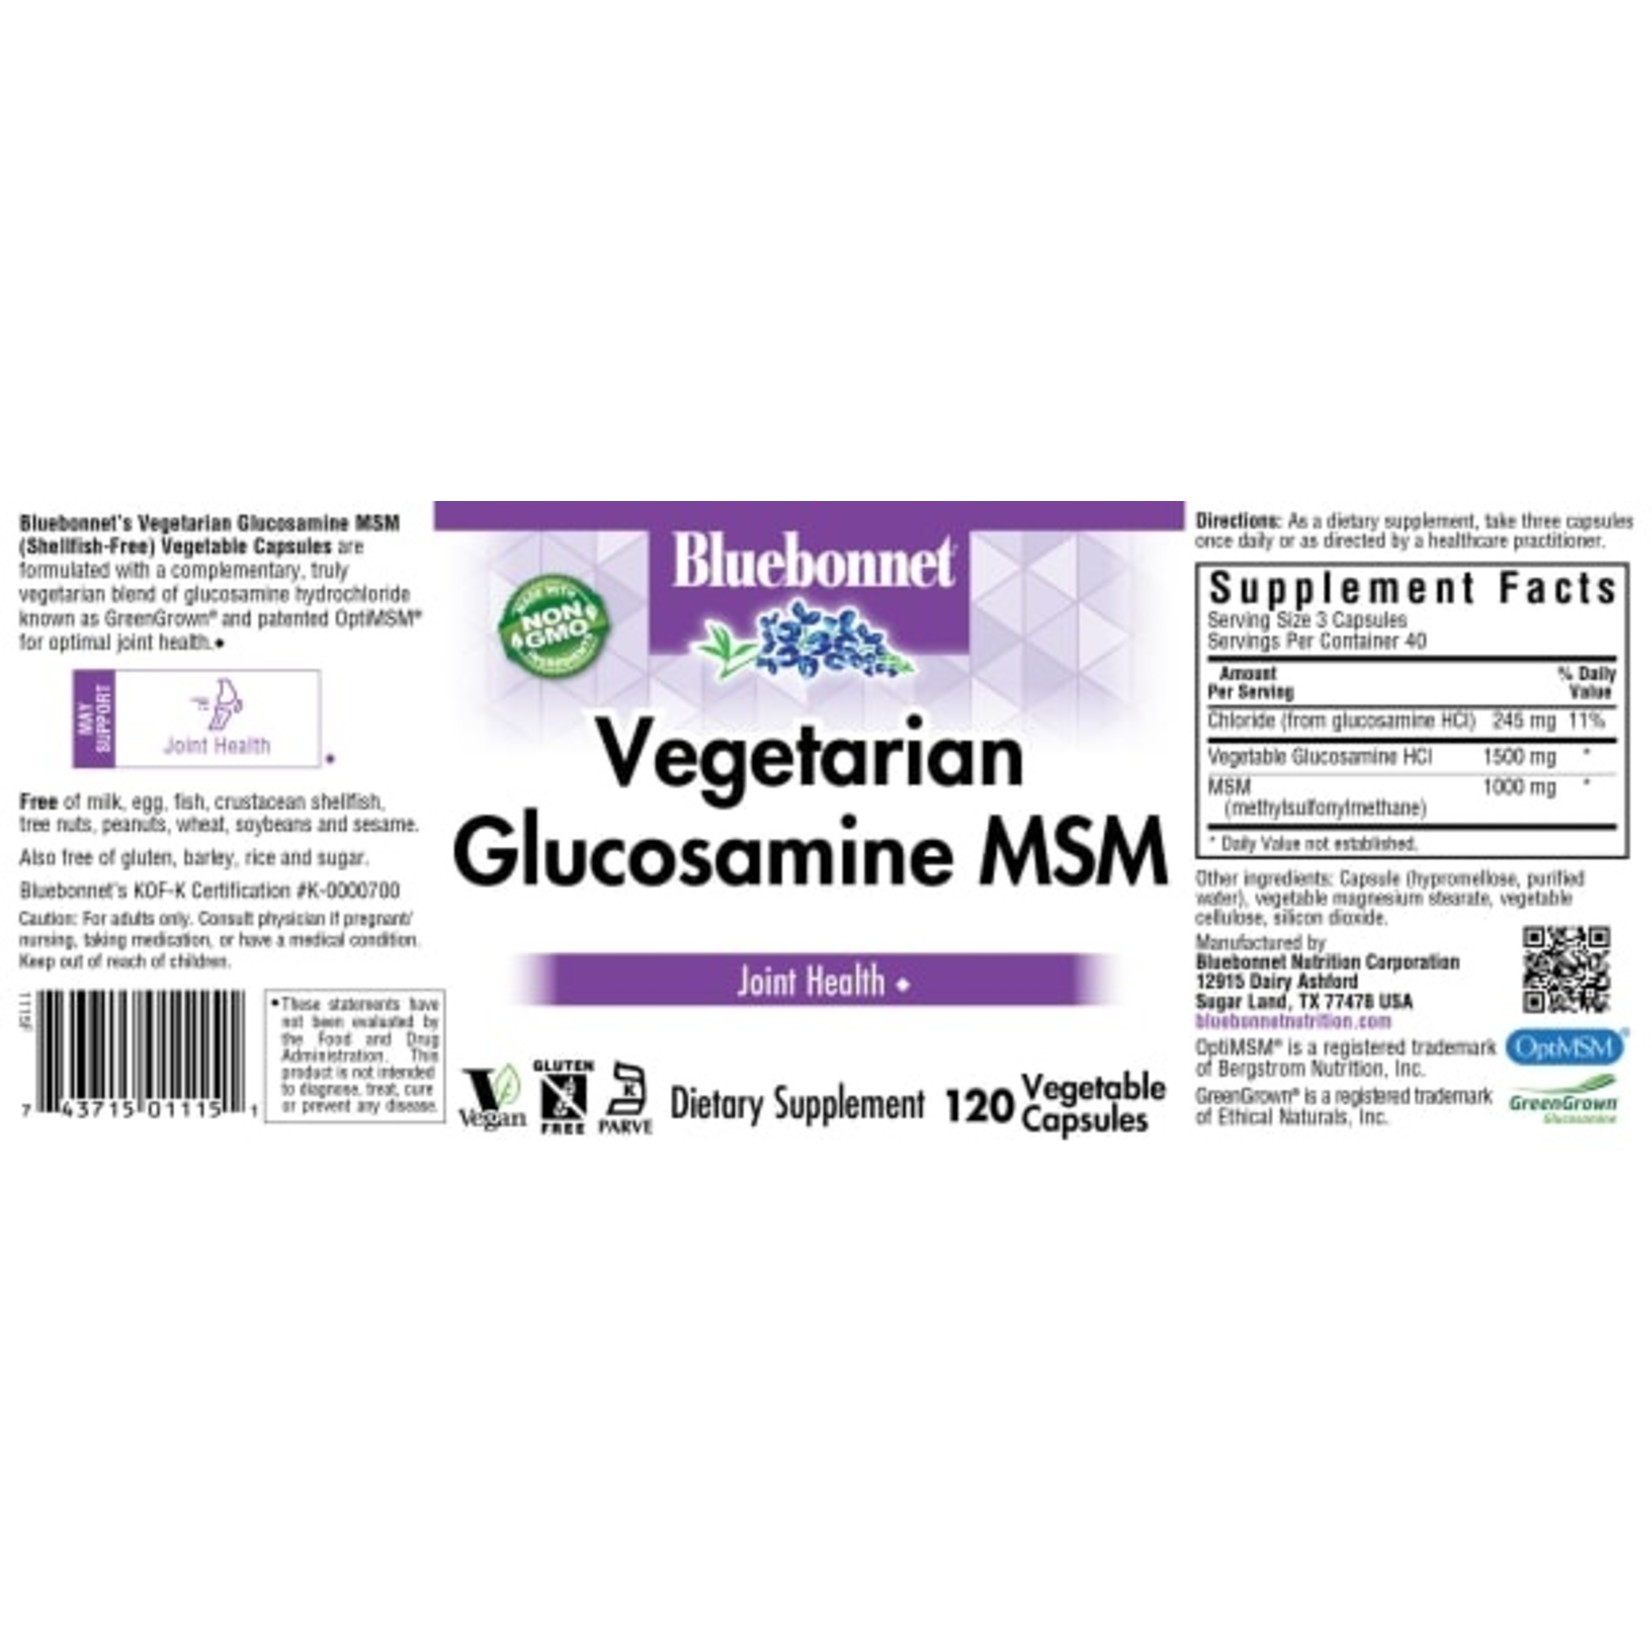 Bluebonnet Bluebonnet - Veg Glucosamine MSM - 120 Veg Capsules